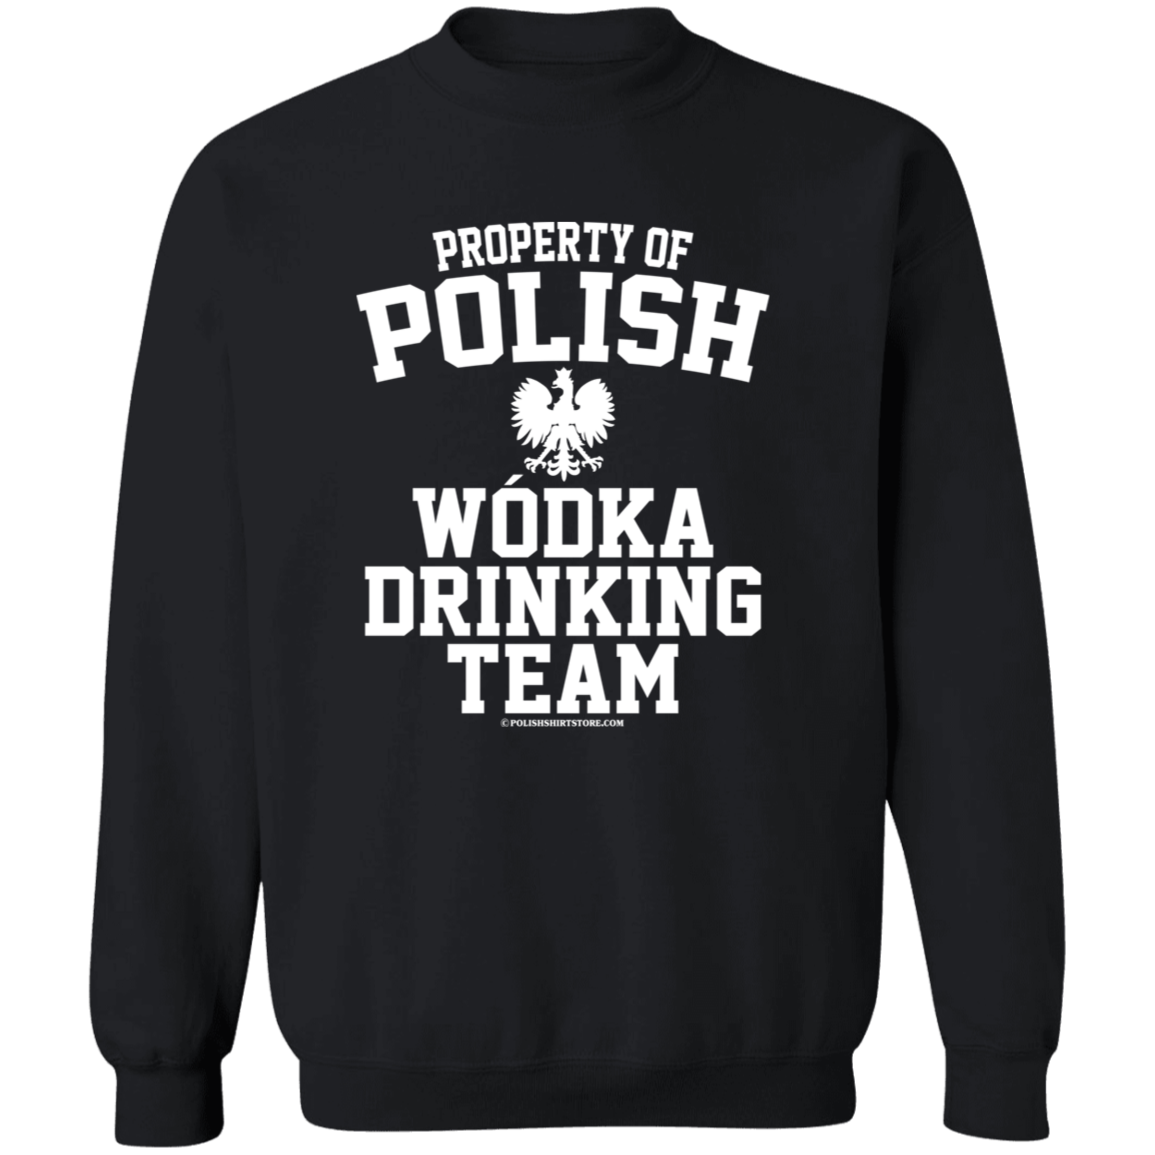 Property of Polish Wodka Drinking Team Apparel CustomCat G180 Crewneck Pullover Sweatshirt Black S